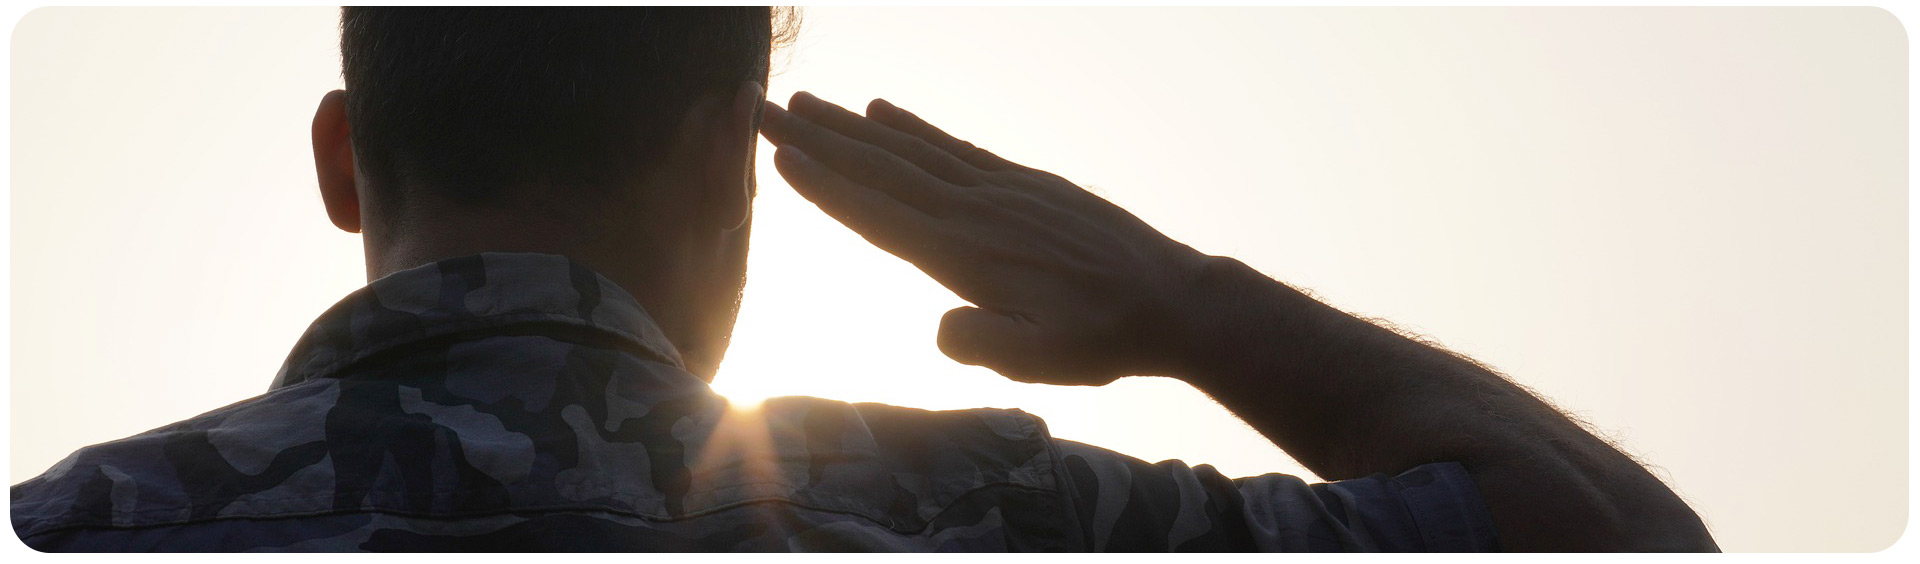 military salute image 